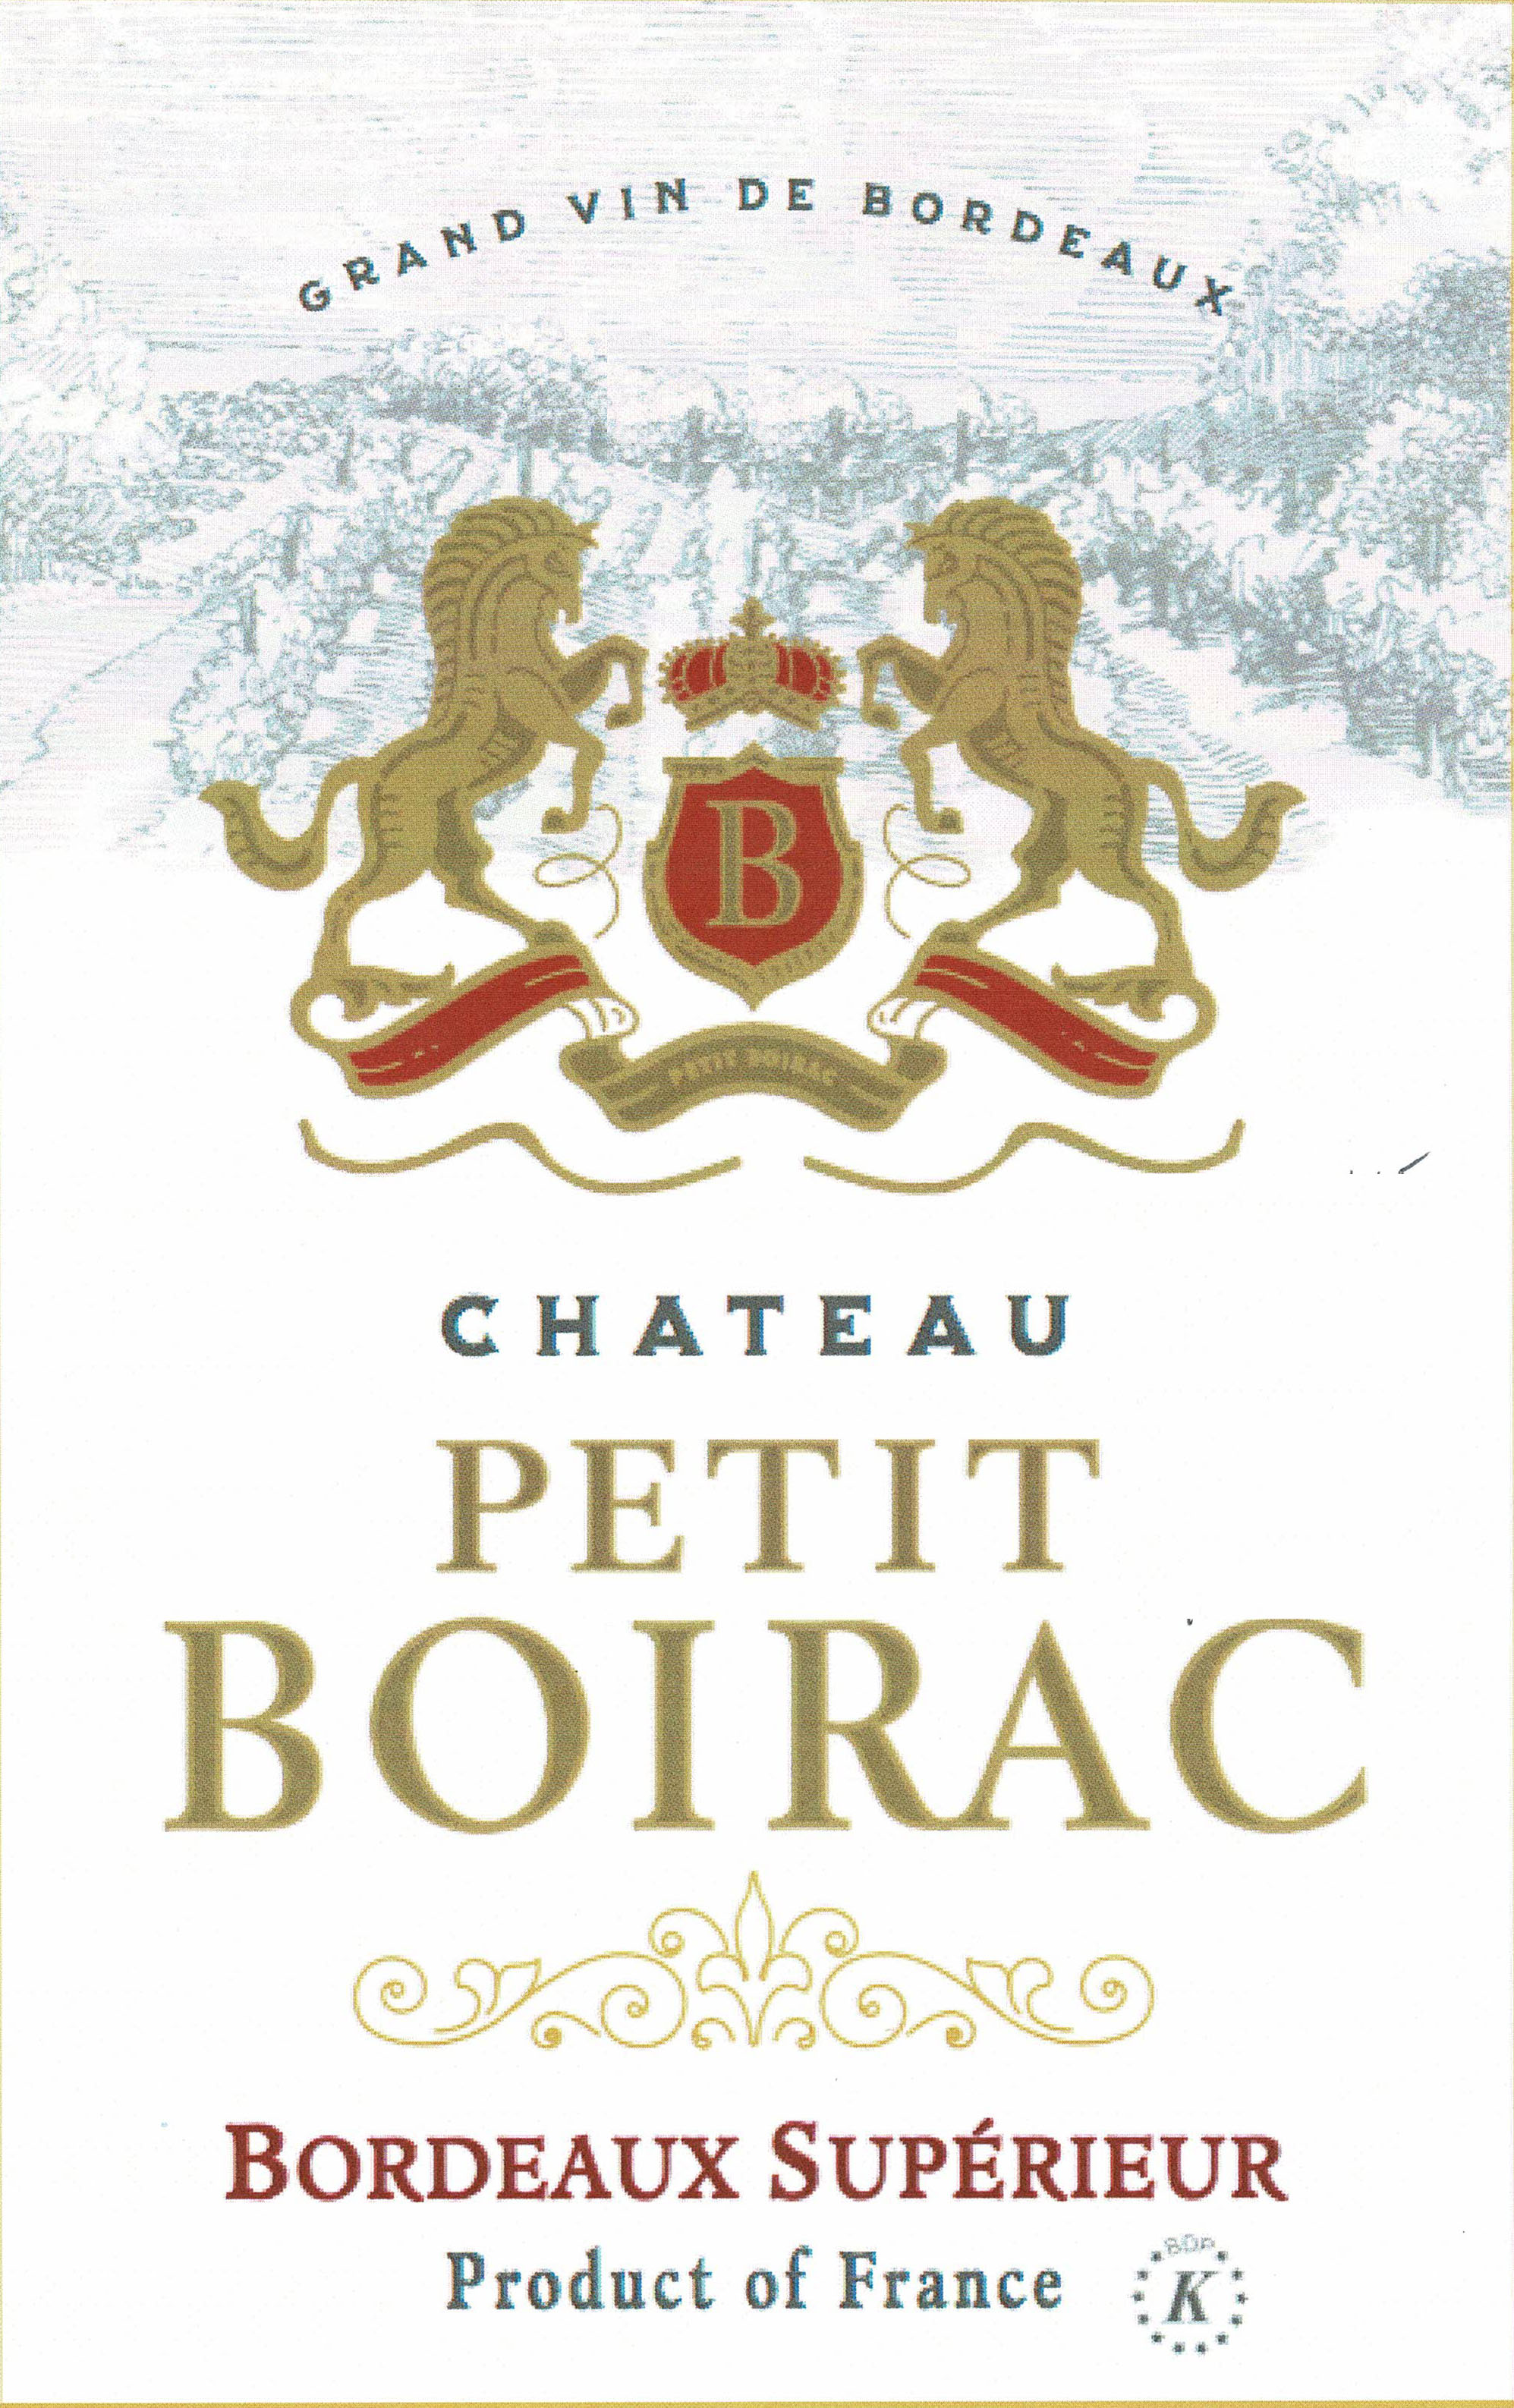 Chateau Petit Boirac label